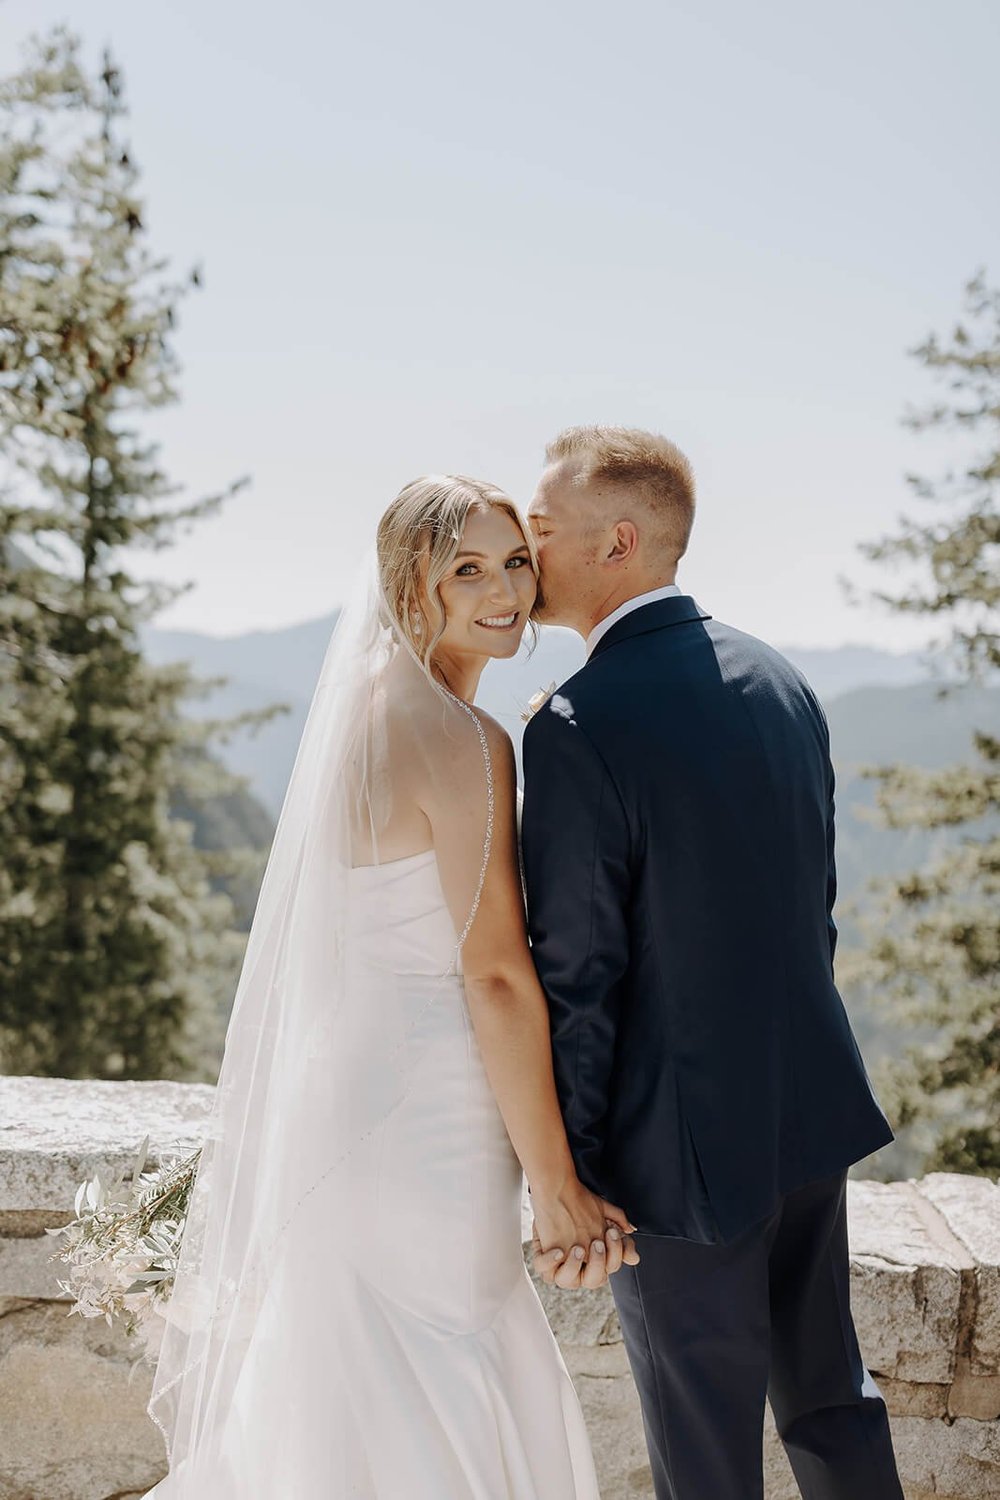 Groom kissing bride on the cheek during wedding portraits at Mount Rainier